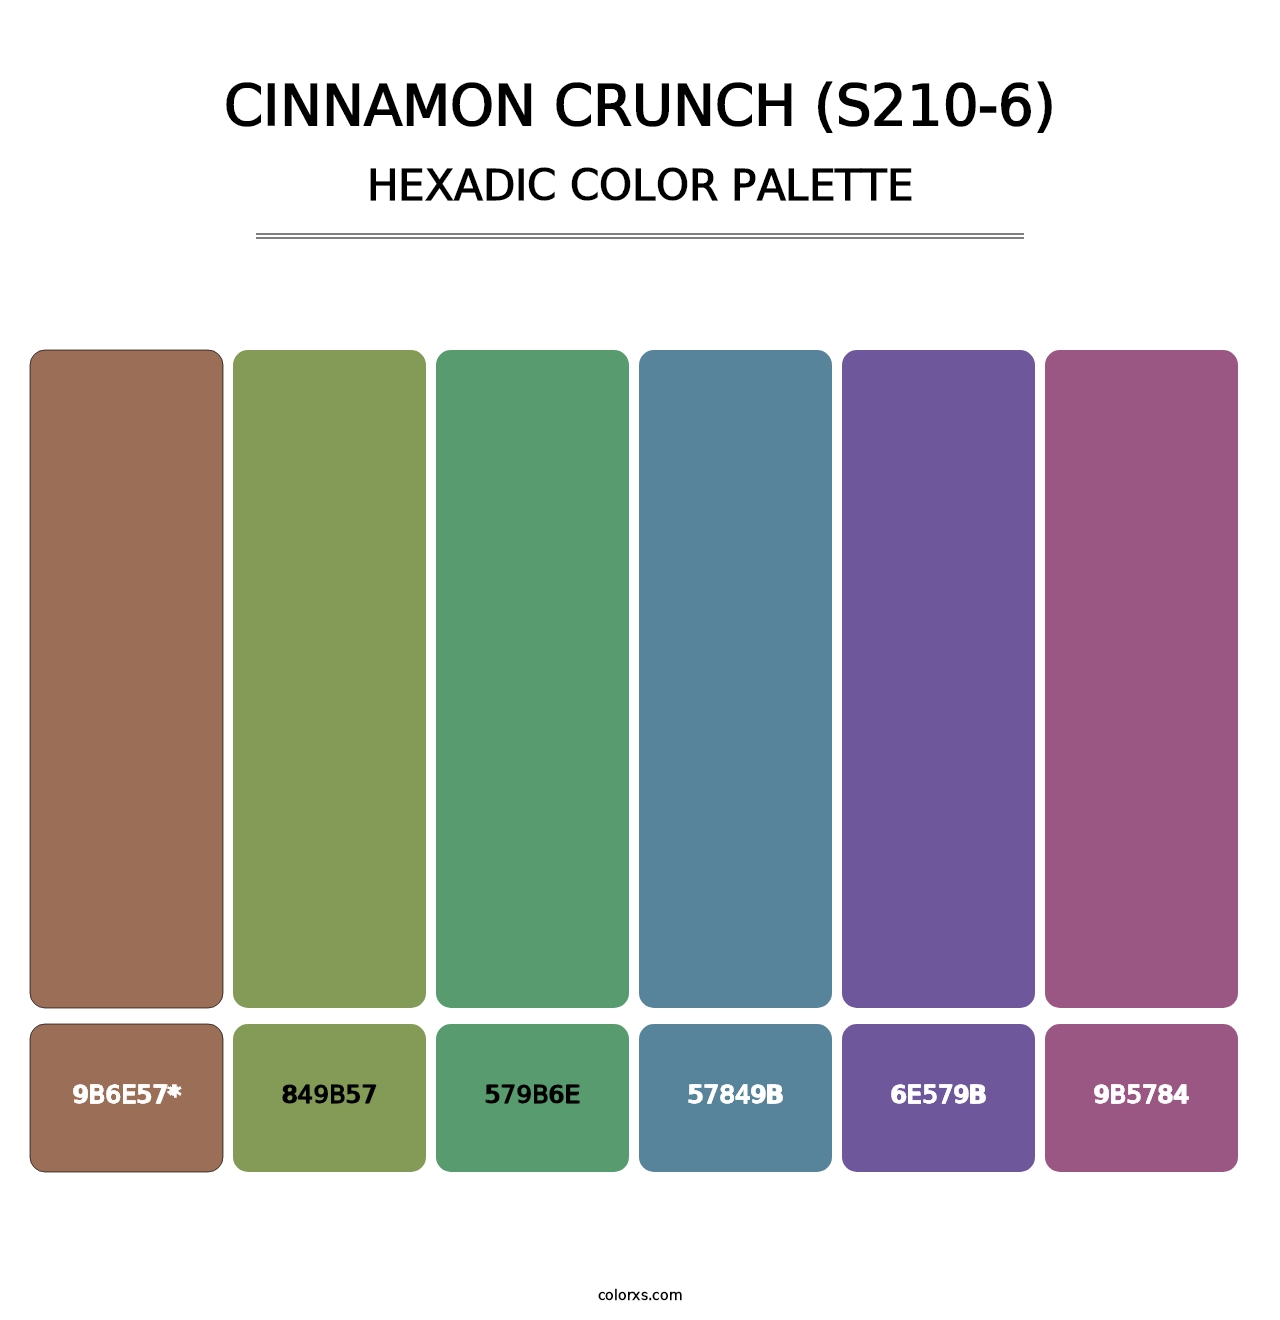 Cinnamon Crunch (S210-6) - Hexadic Color Palette